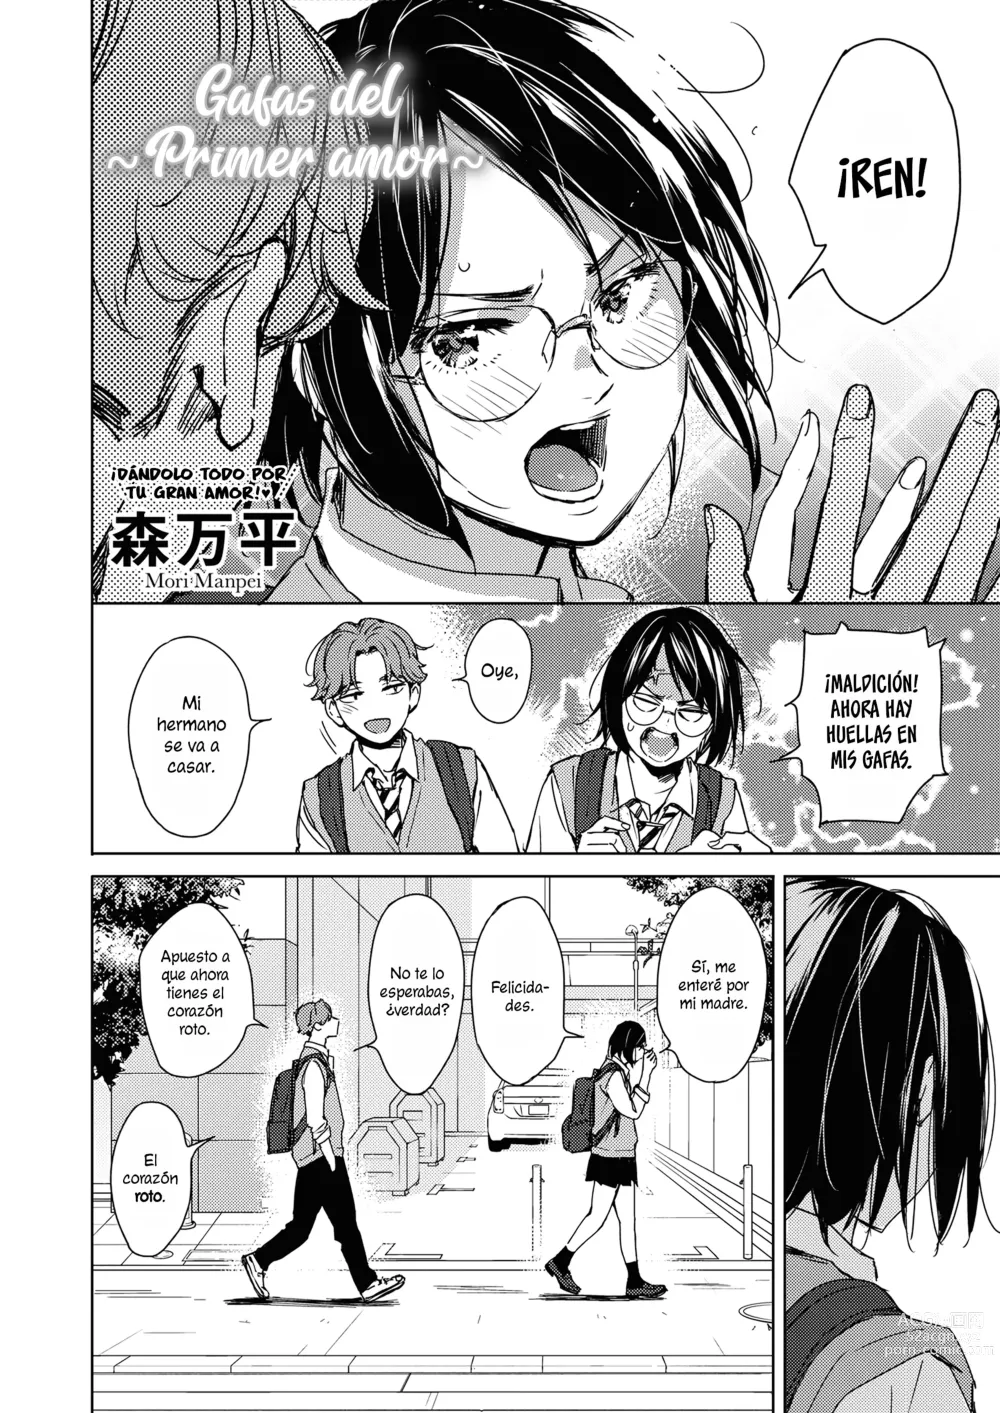 Page 2 of manga Gafas del ~Primer amor~